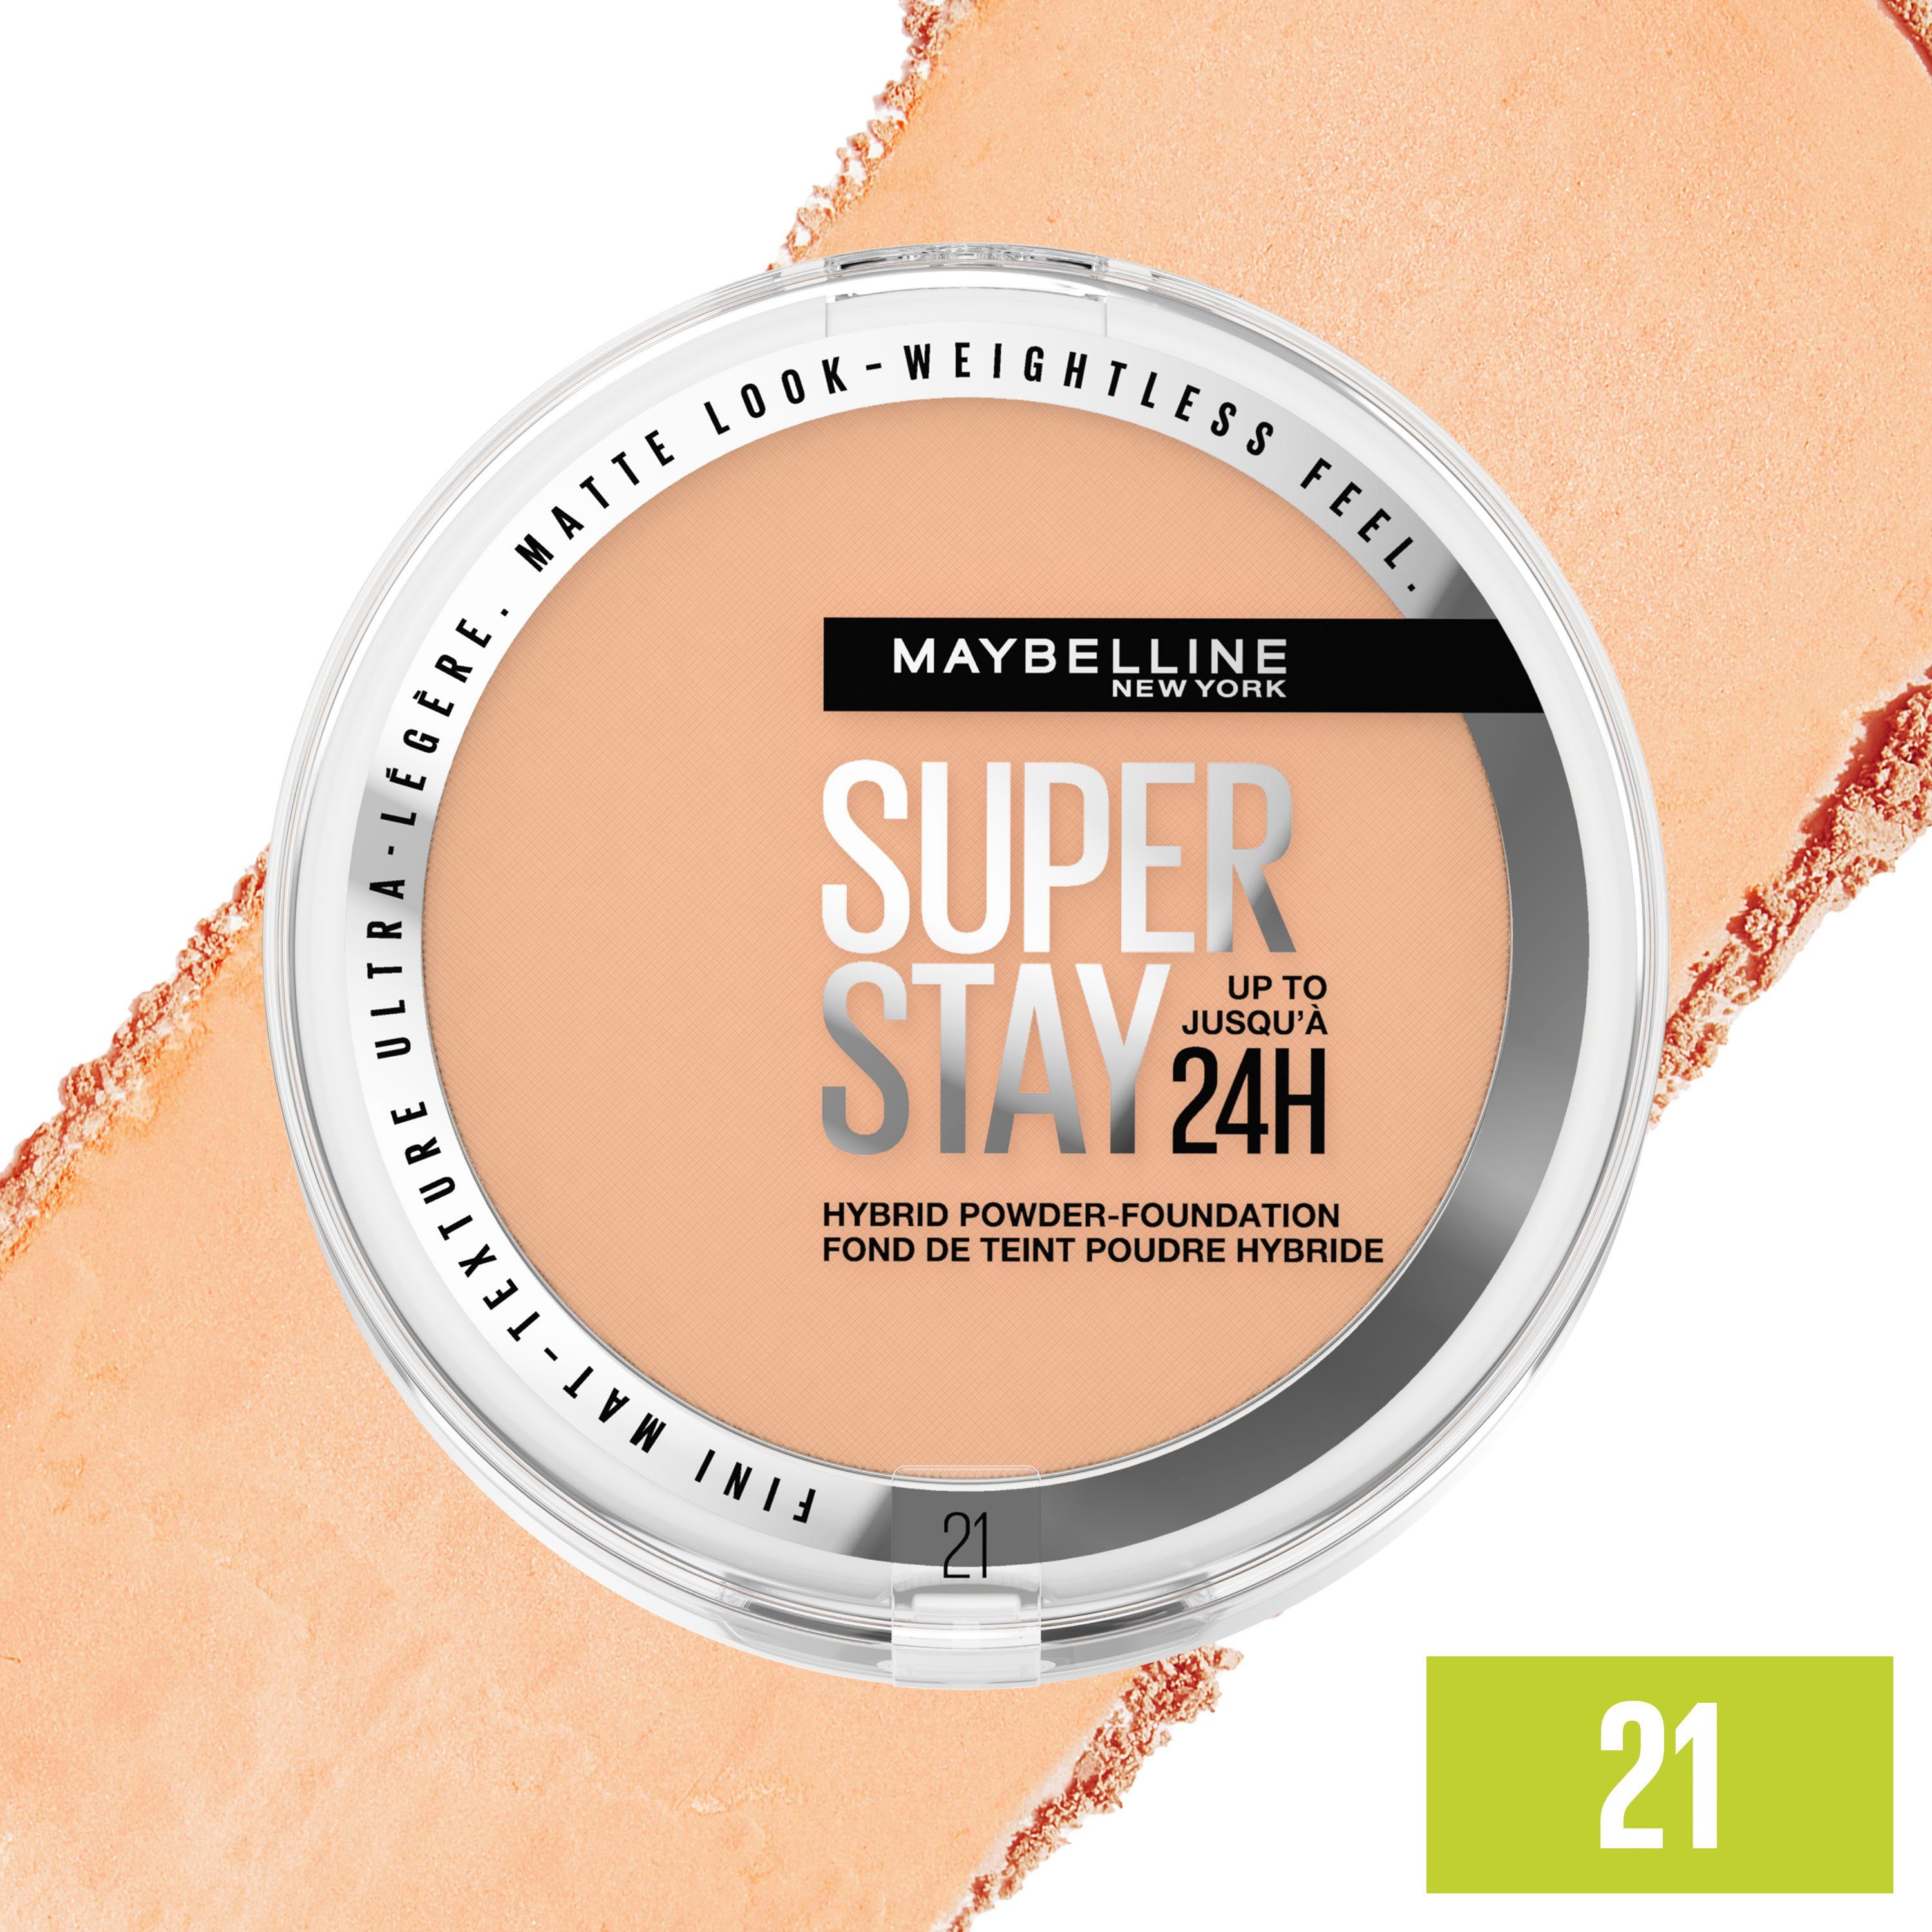 MAYBELLINE NEW YORK Foundation Maybelline Super Hybrides Stay Make-Up Puder York New